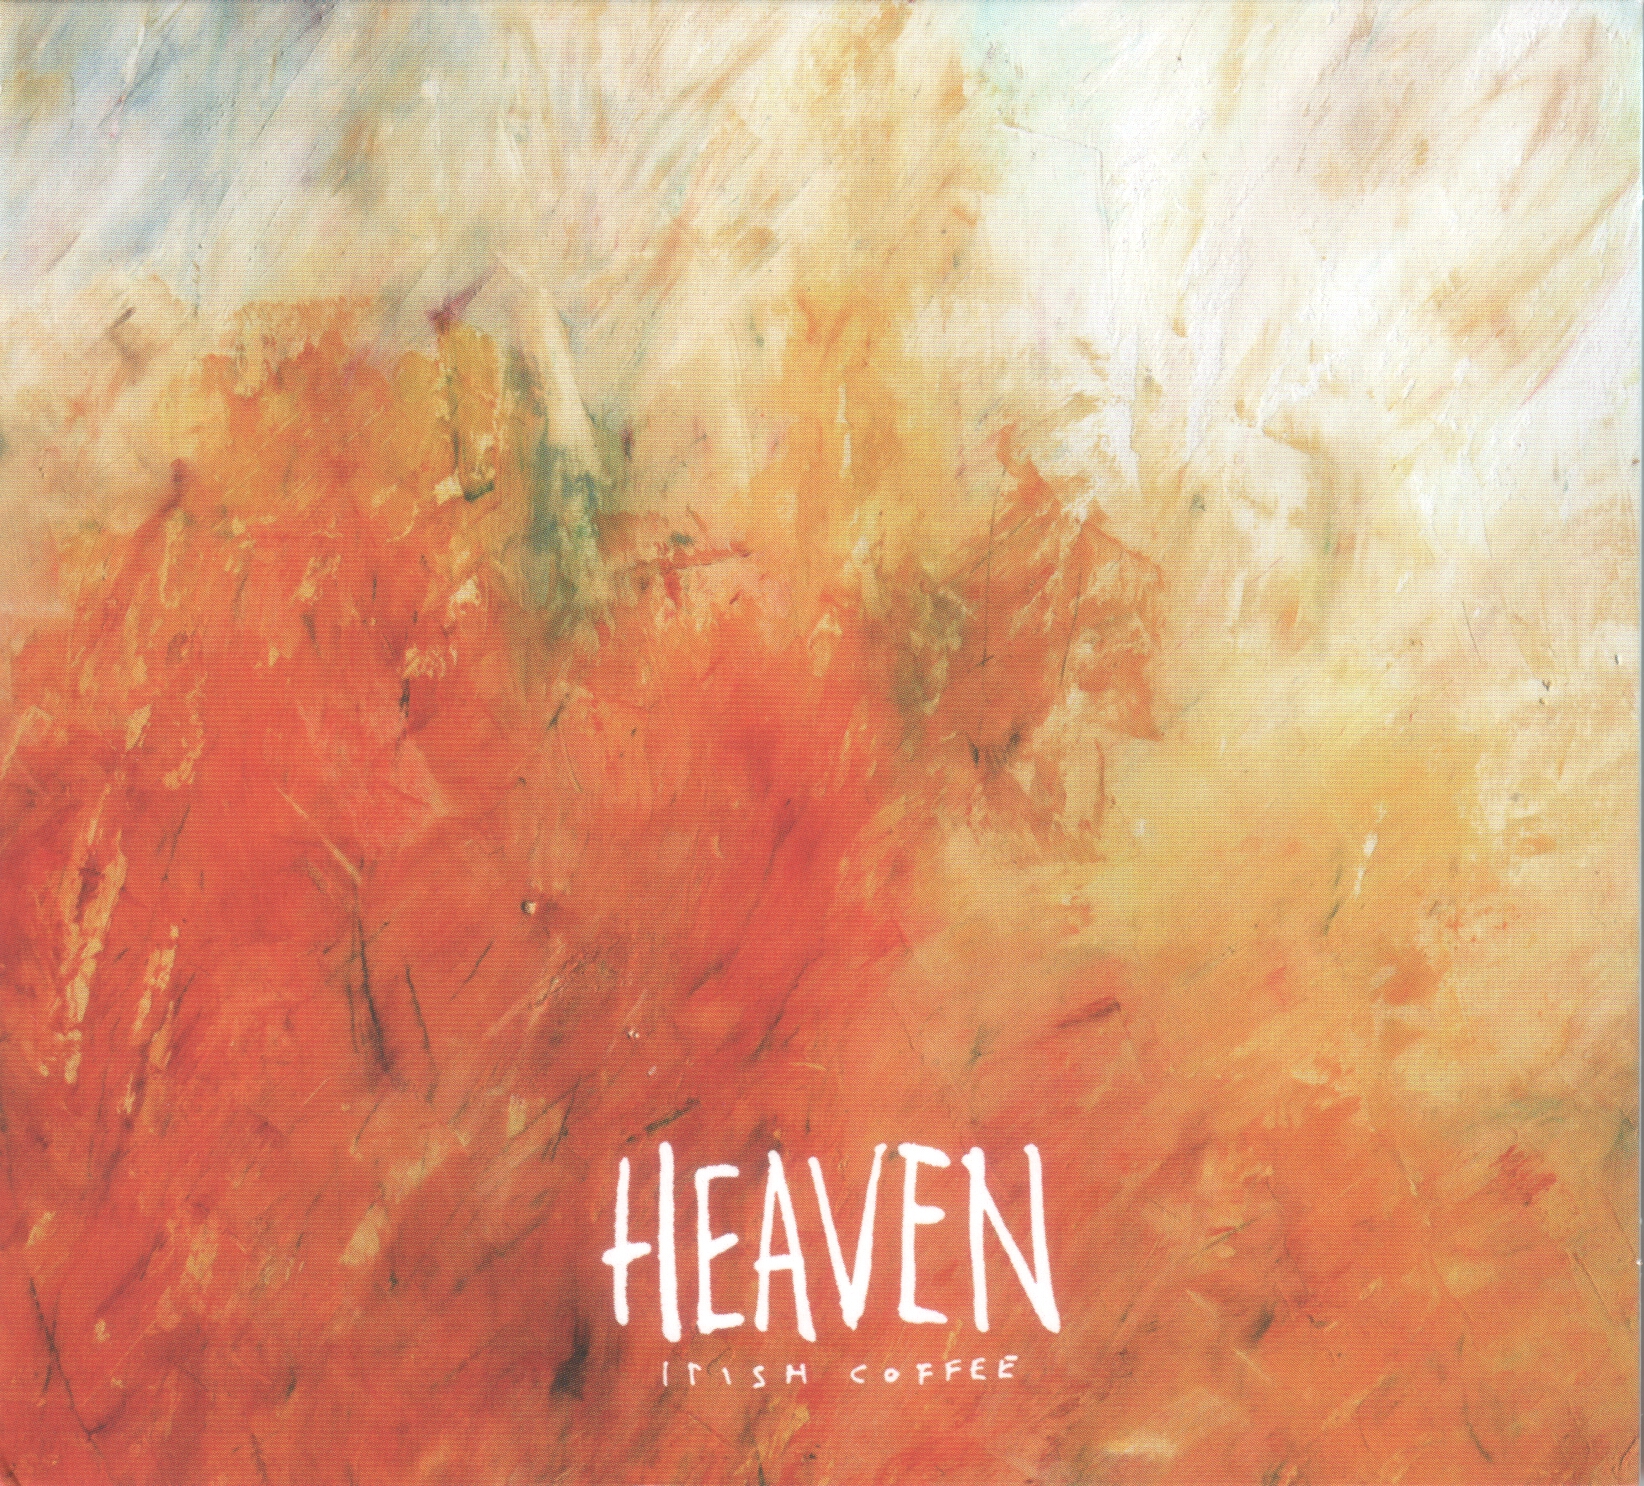 Irish Coffee - Heaven cover